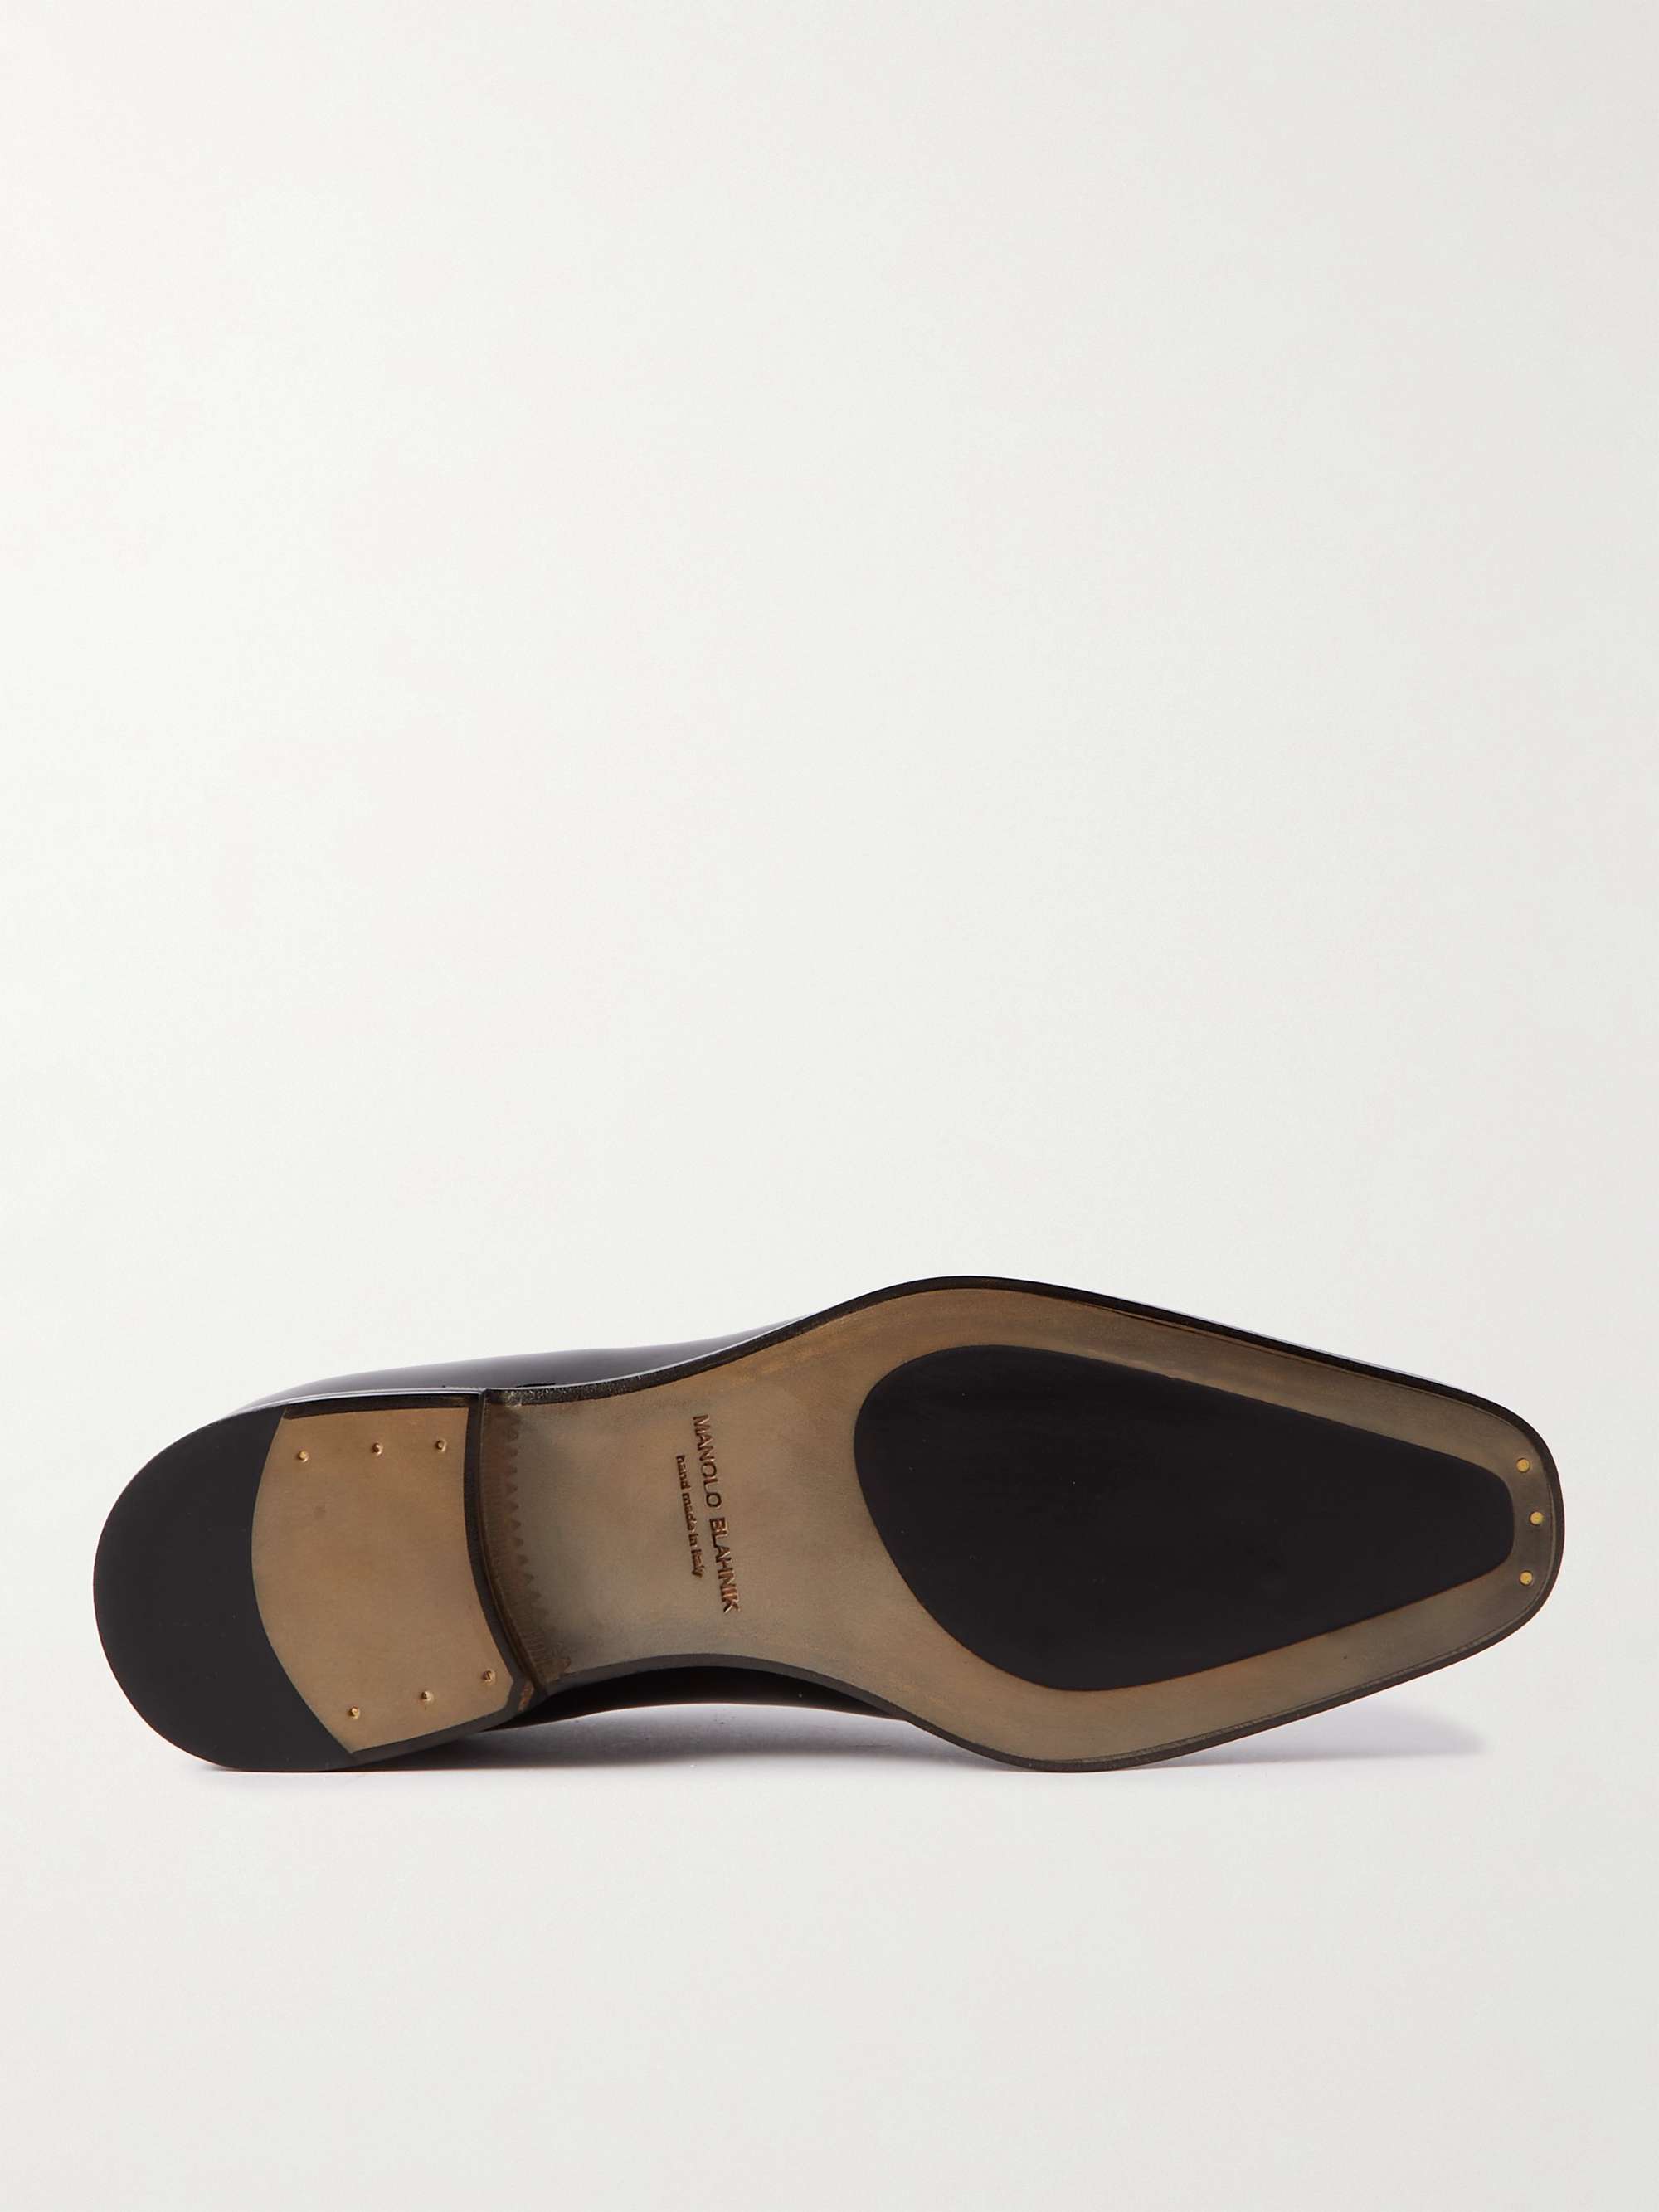 MANOLO BLAHNIK Whole-Cut Patent-Leather Oxford Shoes